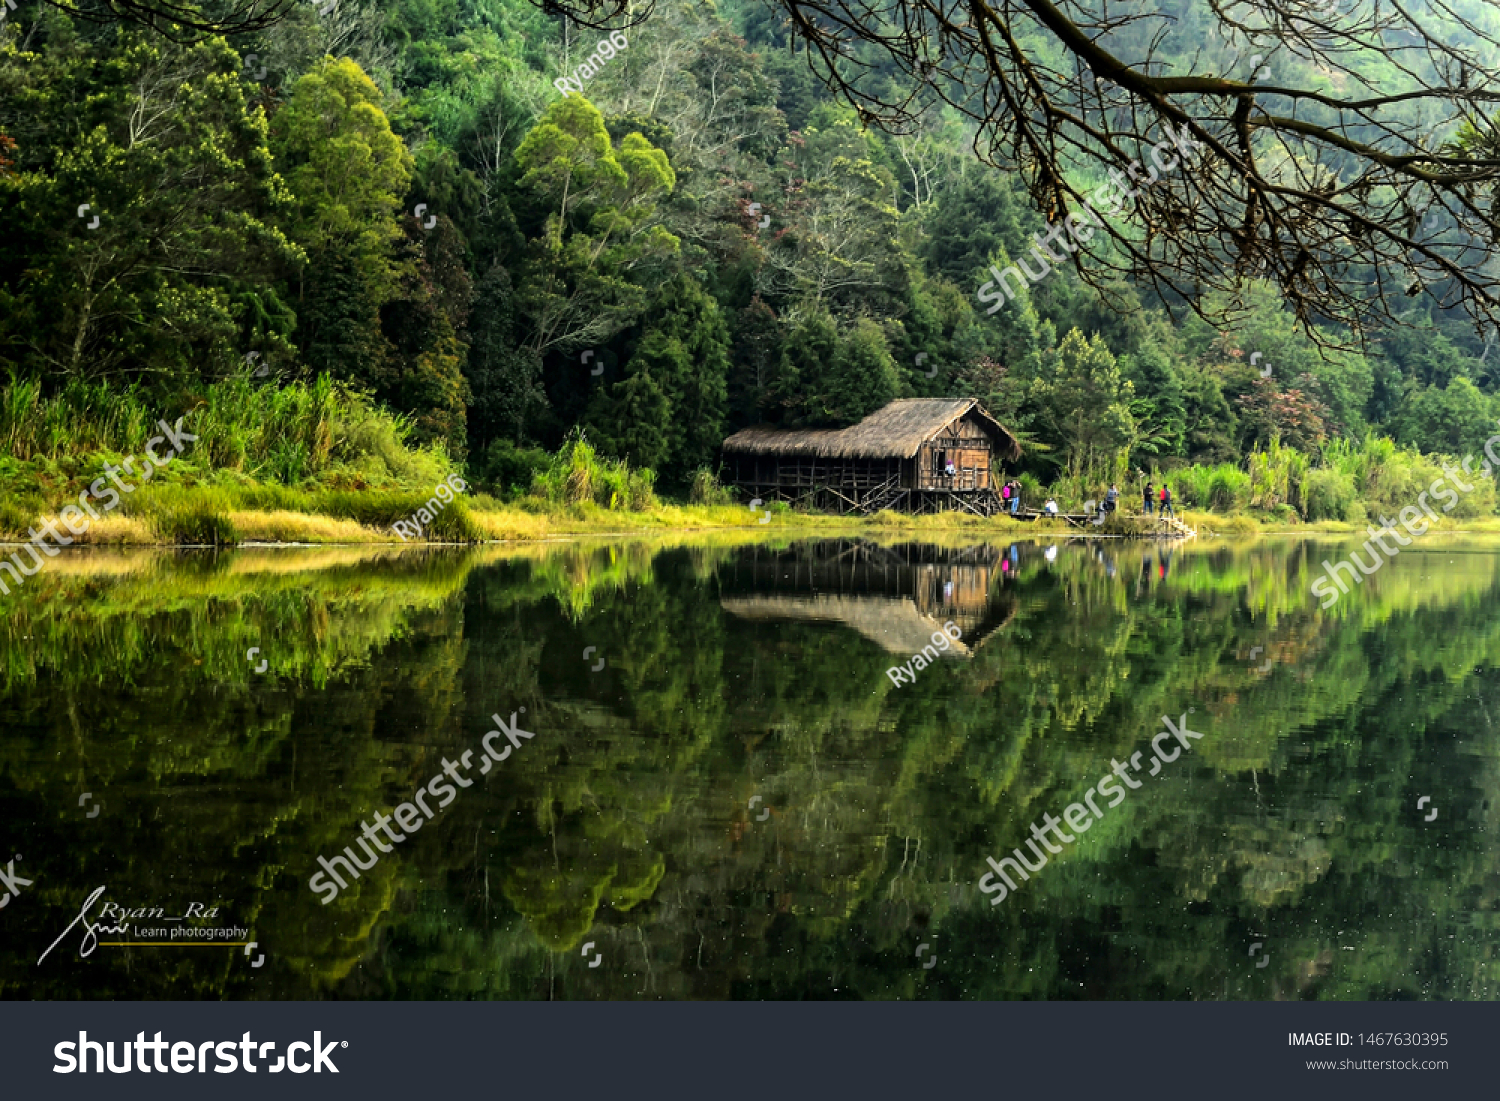 Landscape Reflection. take with nikon d3100 kitt lens #1467630395